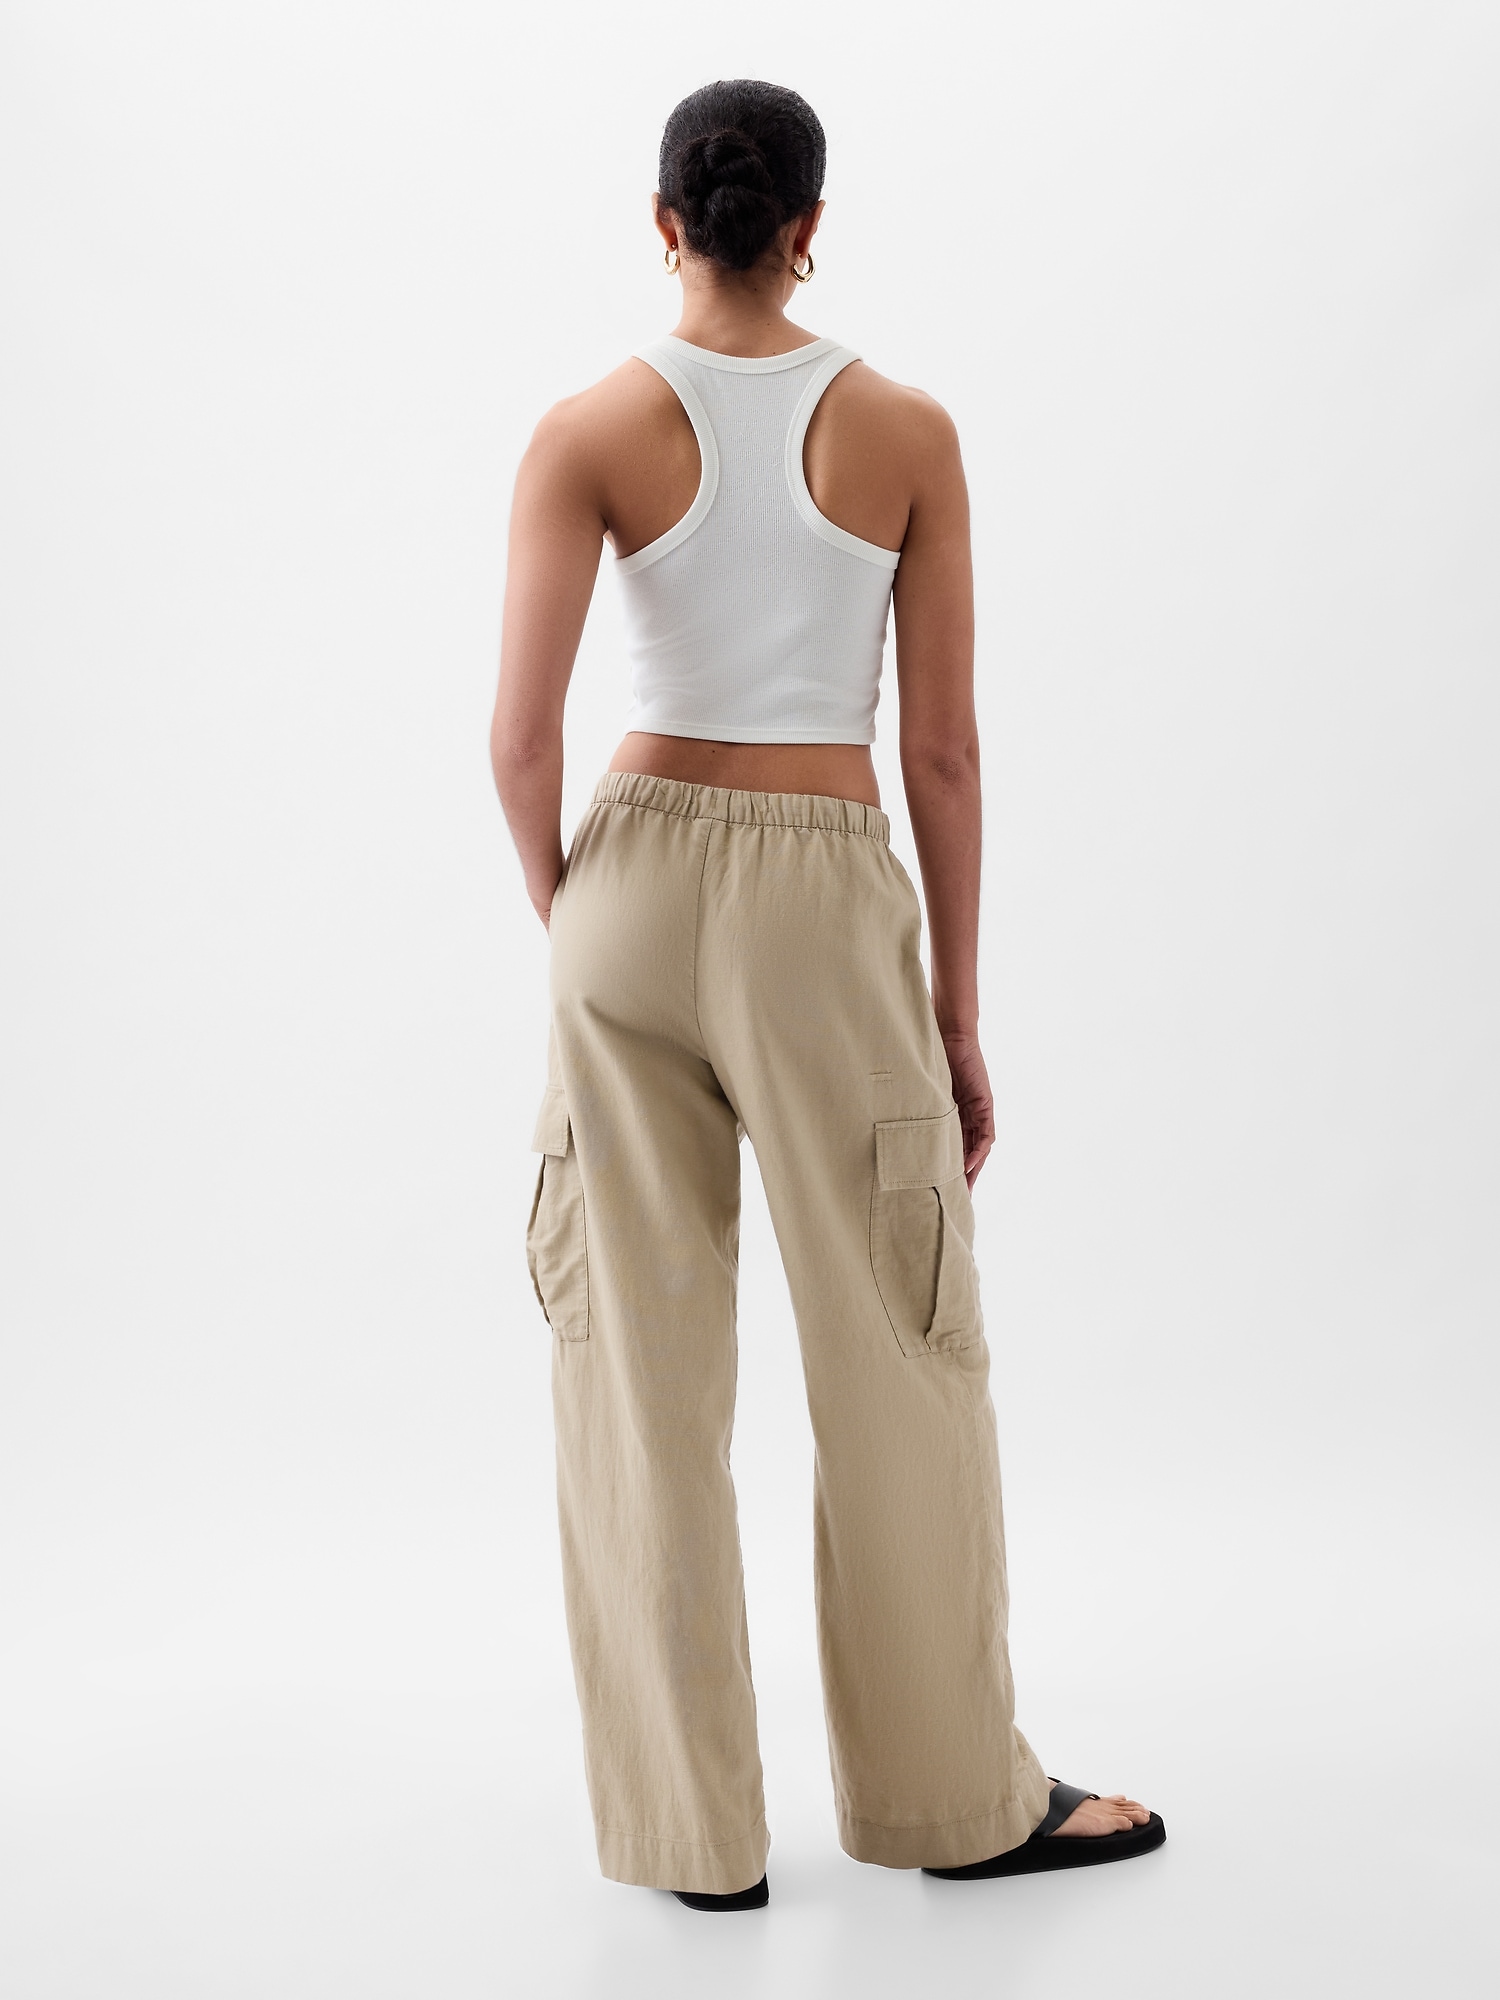 kpoplk Womens Lounge Pants Slacks Cotton Linen Drawstring Summer Casual  Wide Leg Pants for Women Trousers Hot Pink,XL